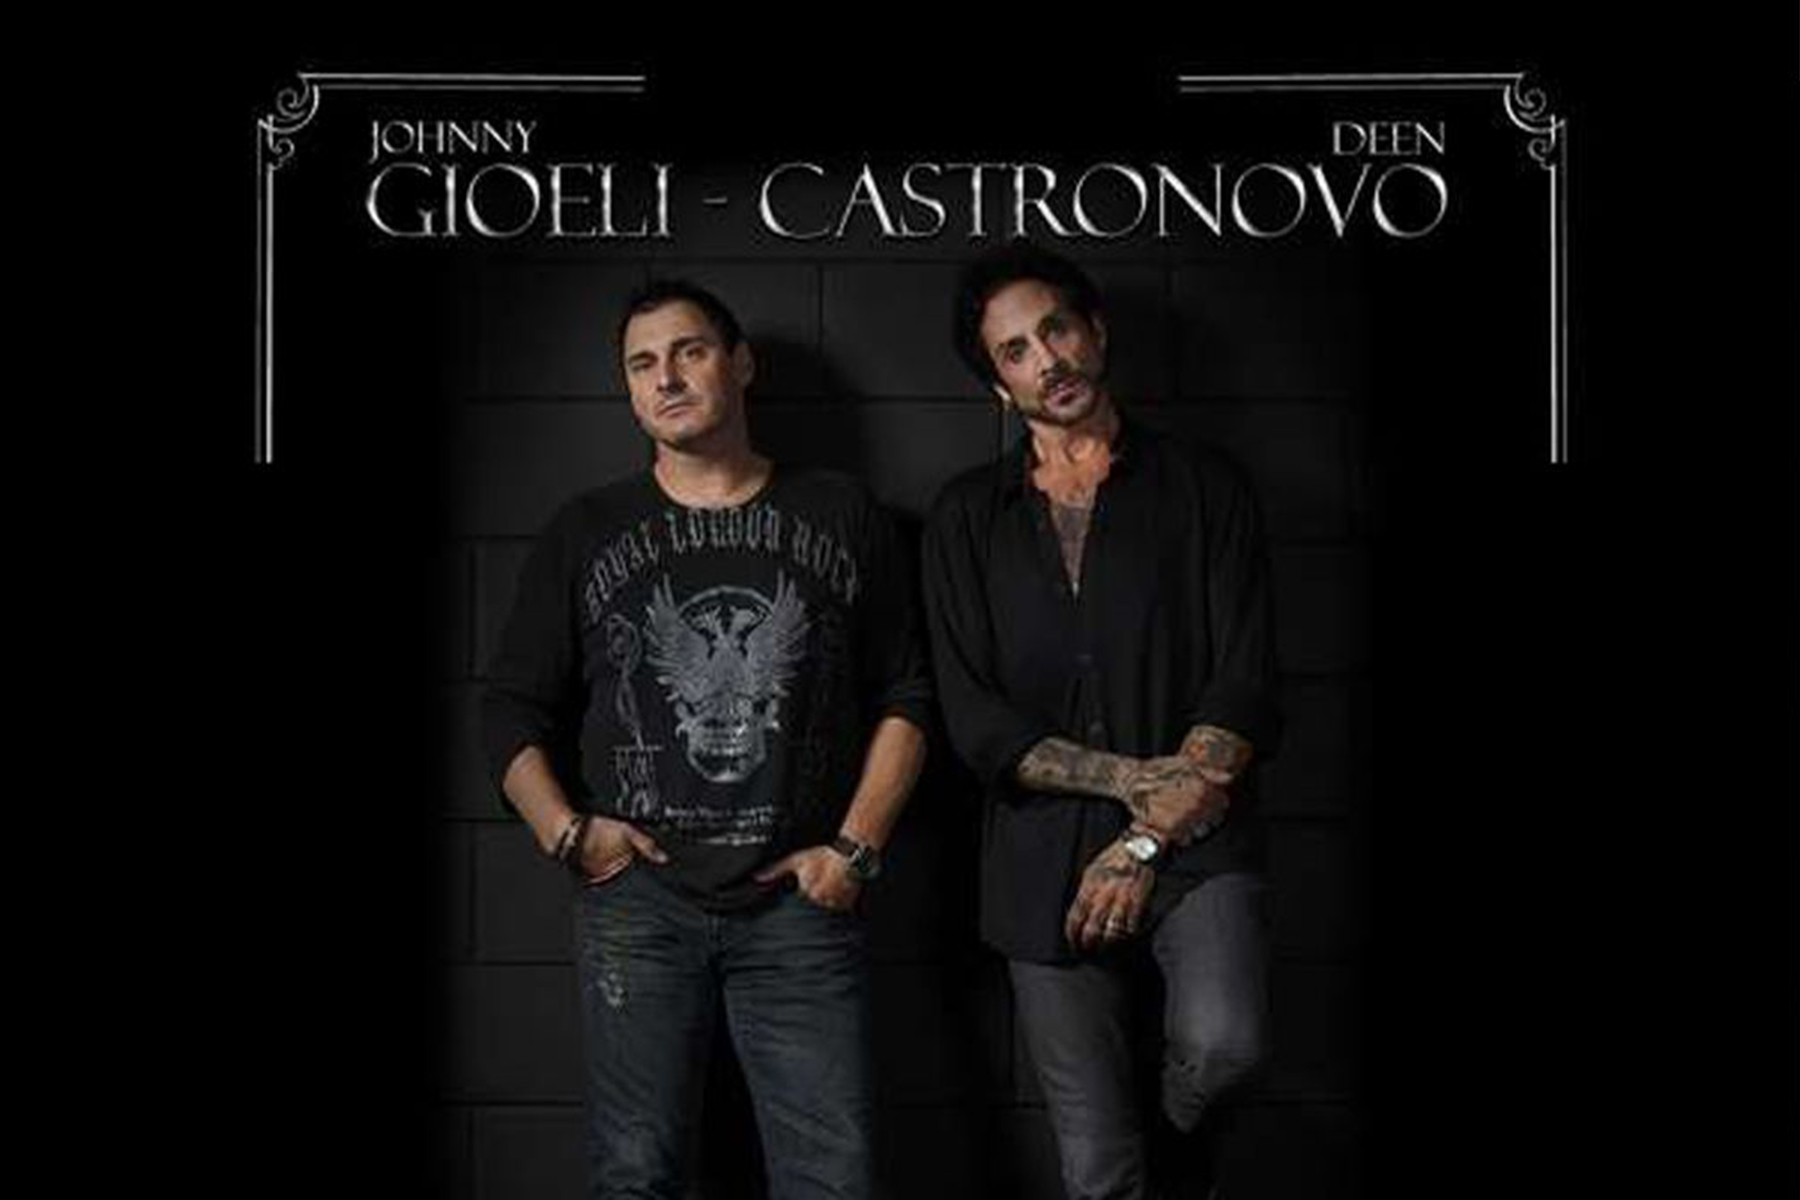 GIOELI - CASTRONOVO Announce Debut Album, 1800 x 1200